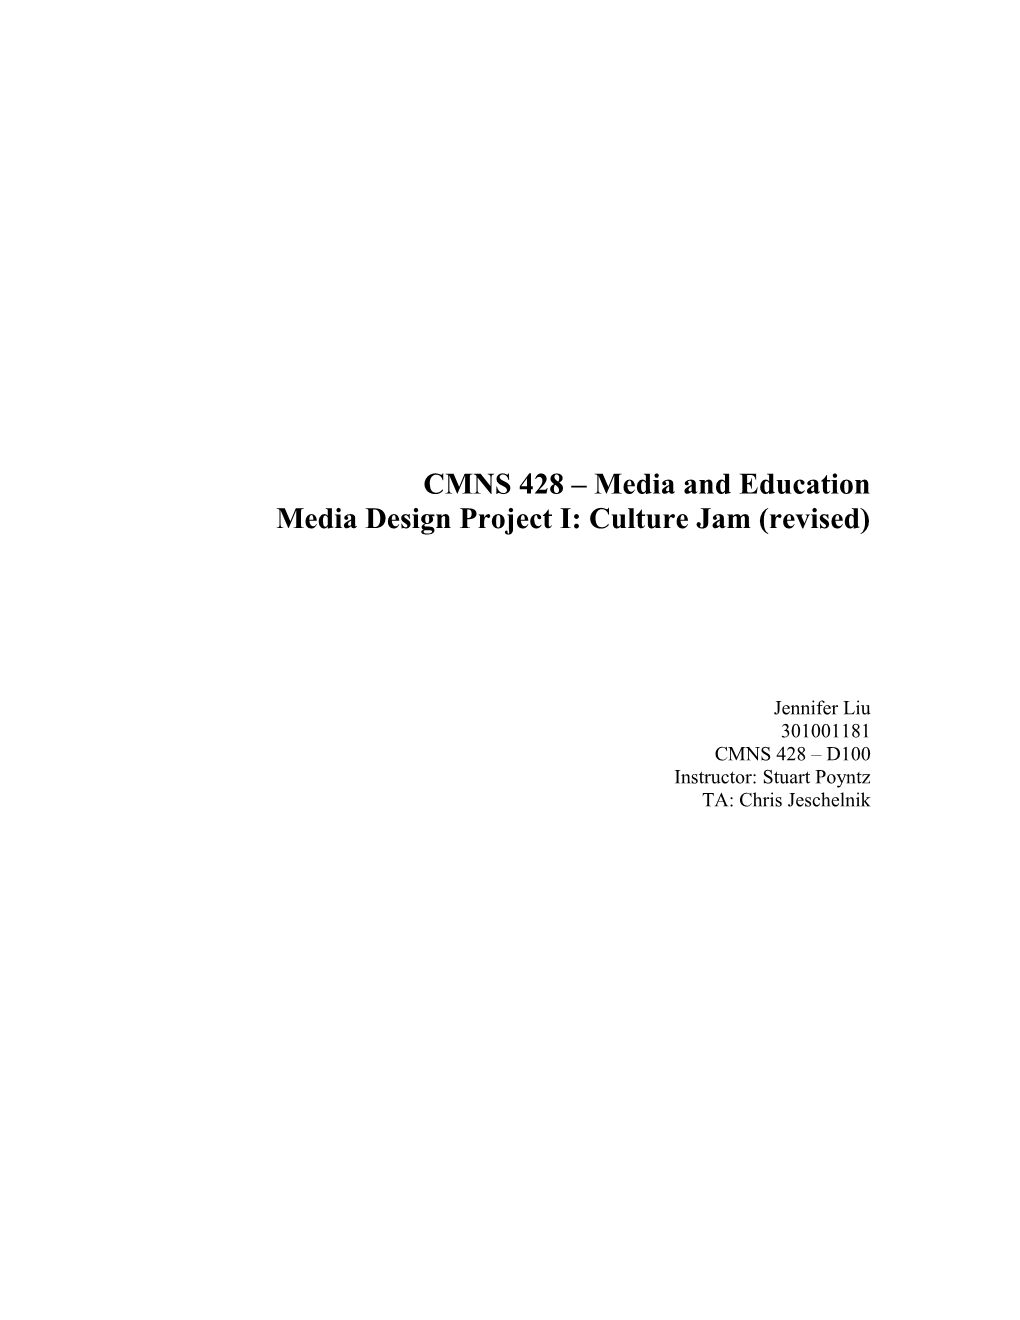 CMNS 428 Media and Education